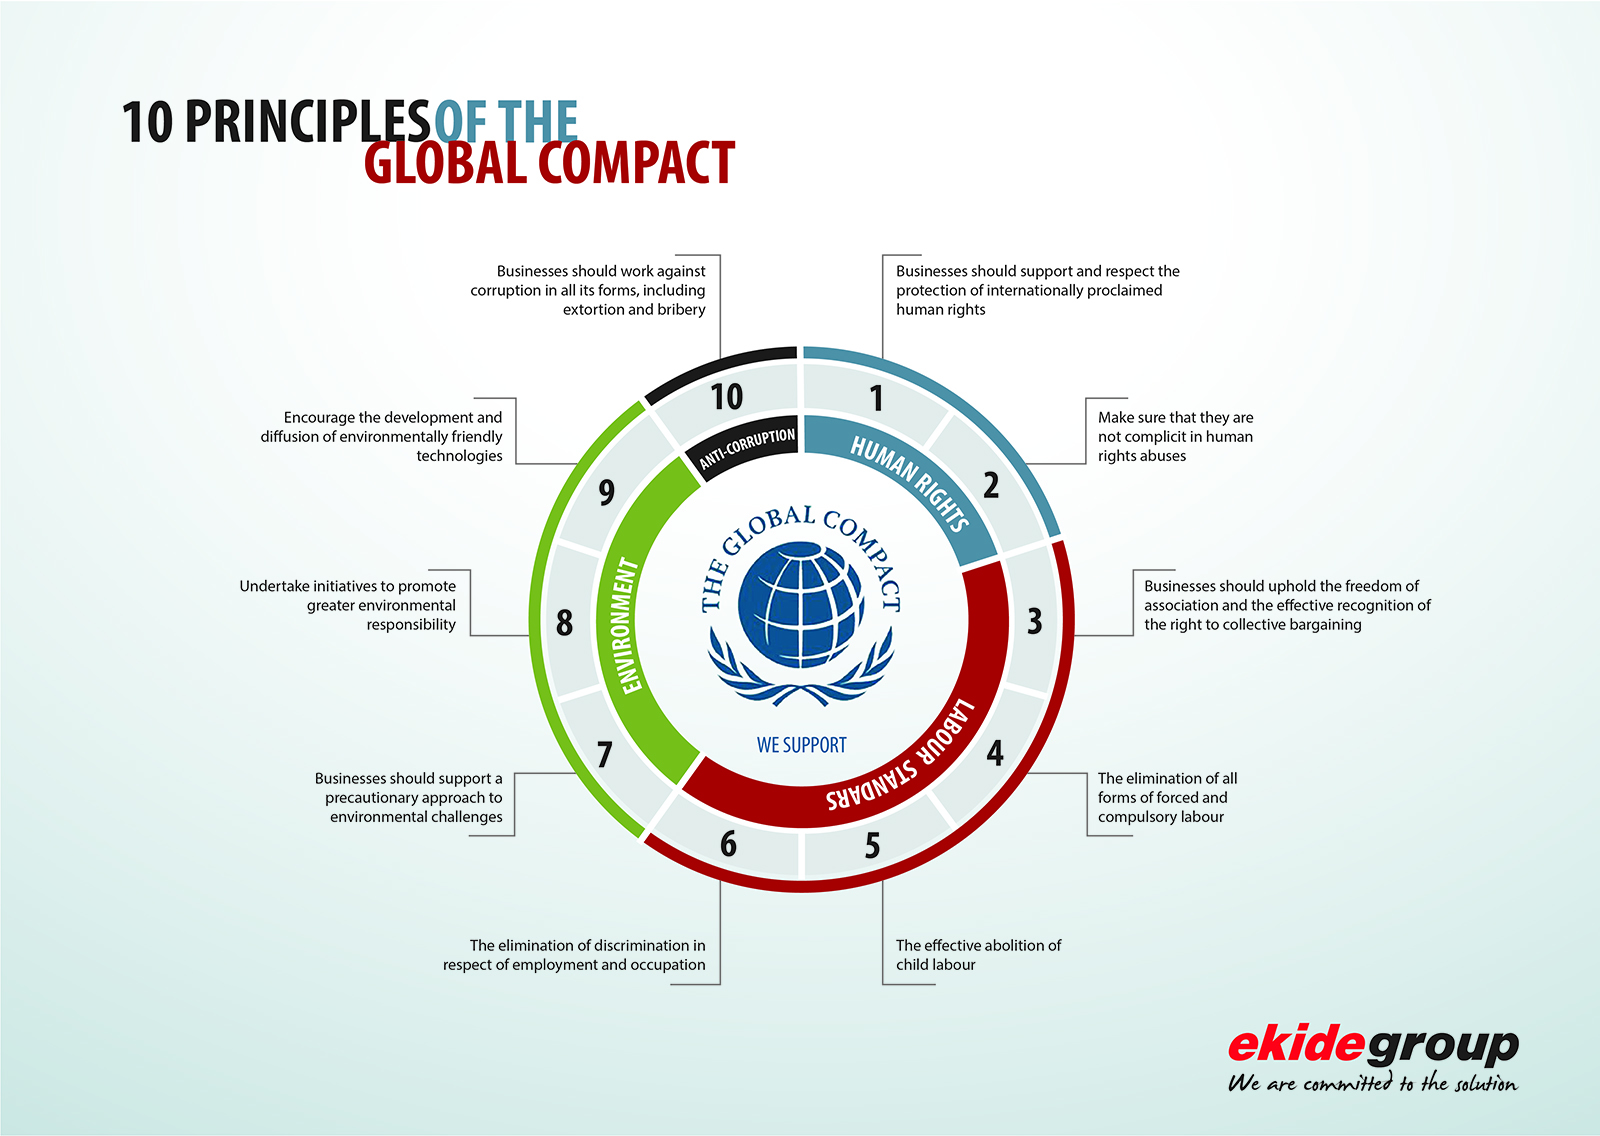 10 principles of the global compact